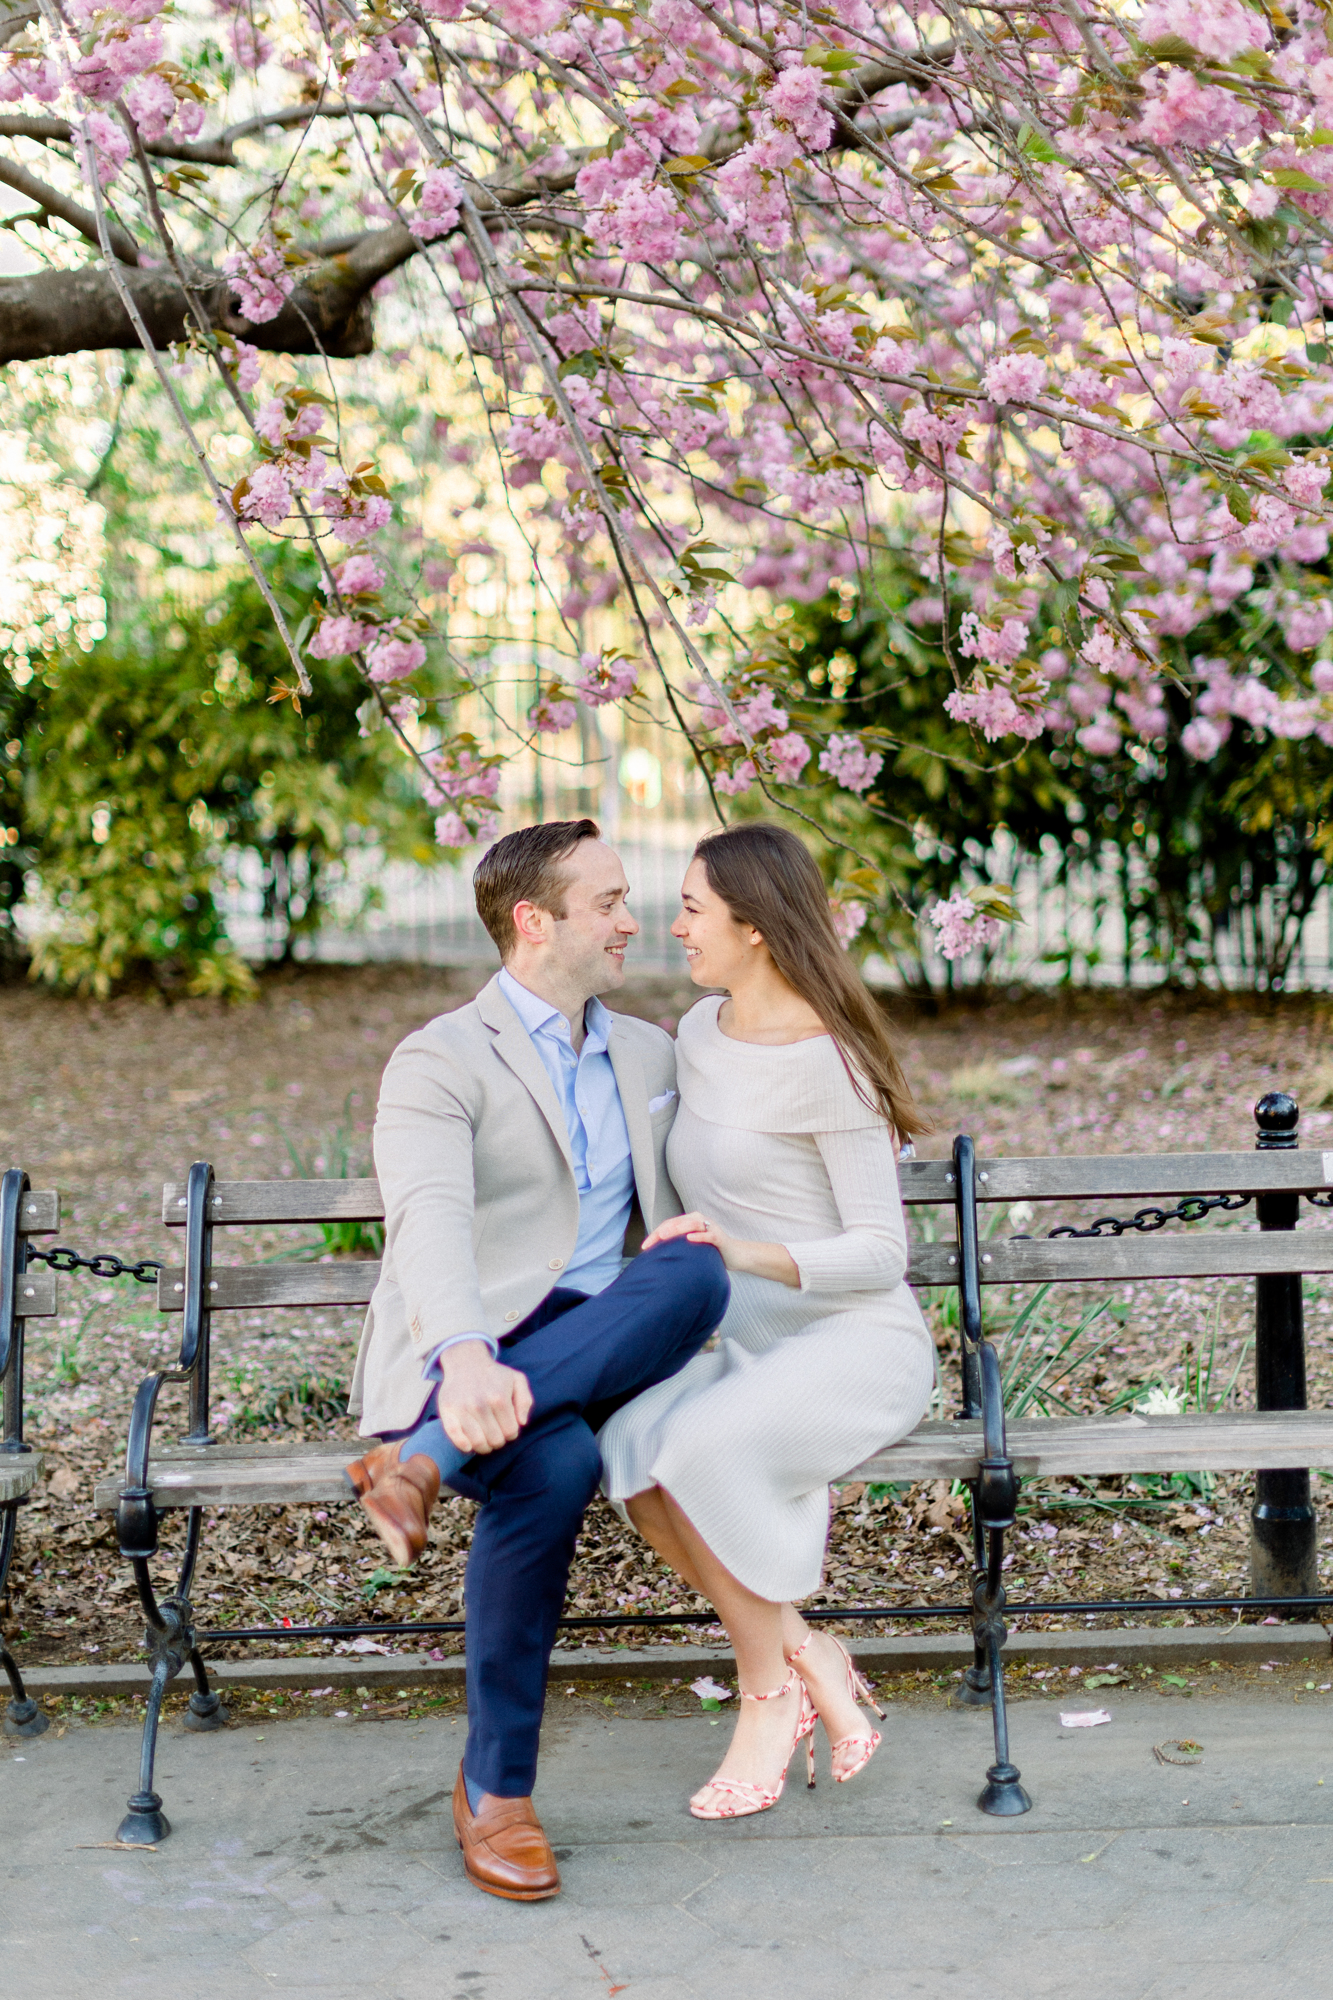 Beautiful Spring Engagement Photos in Washington Square Park NYC